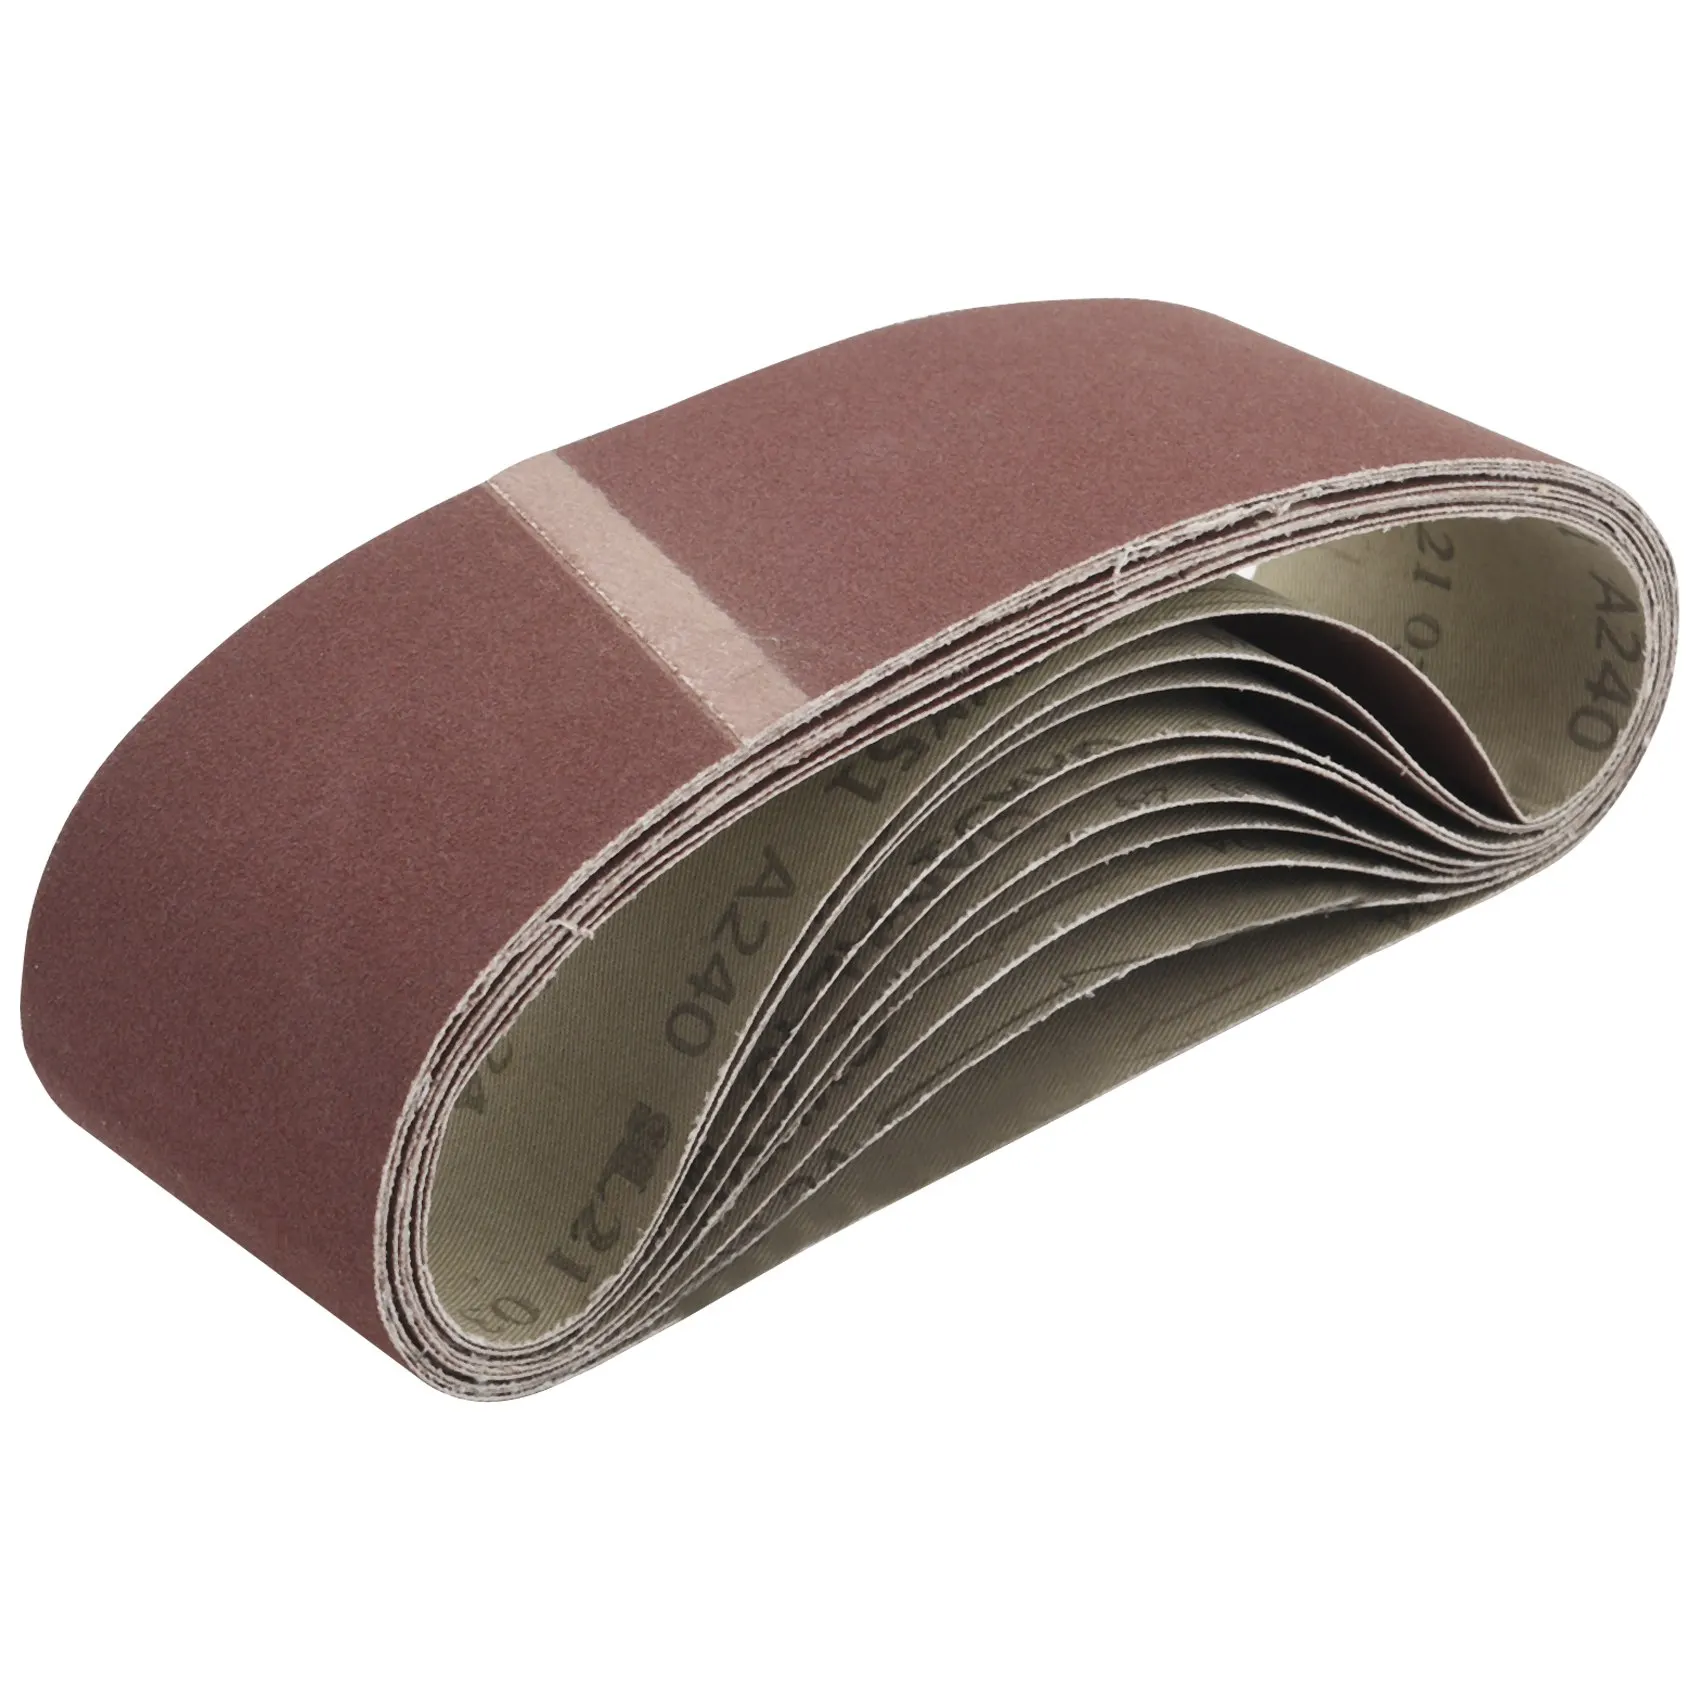 

3 X 21Inch Sanding Belts | 240 Grit Aluminum Oxide Sanding Belt | Premium Sandpaper For Portable Belt Sander – 10 Pack